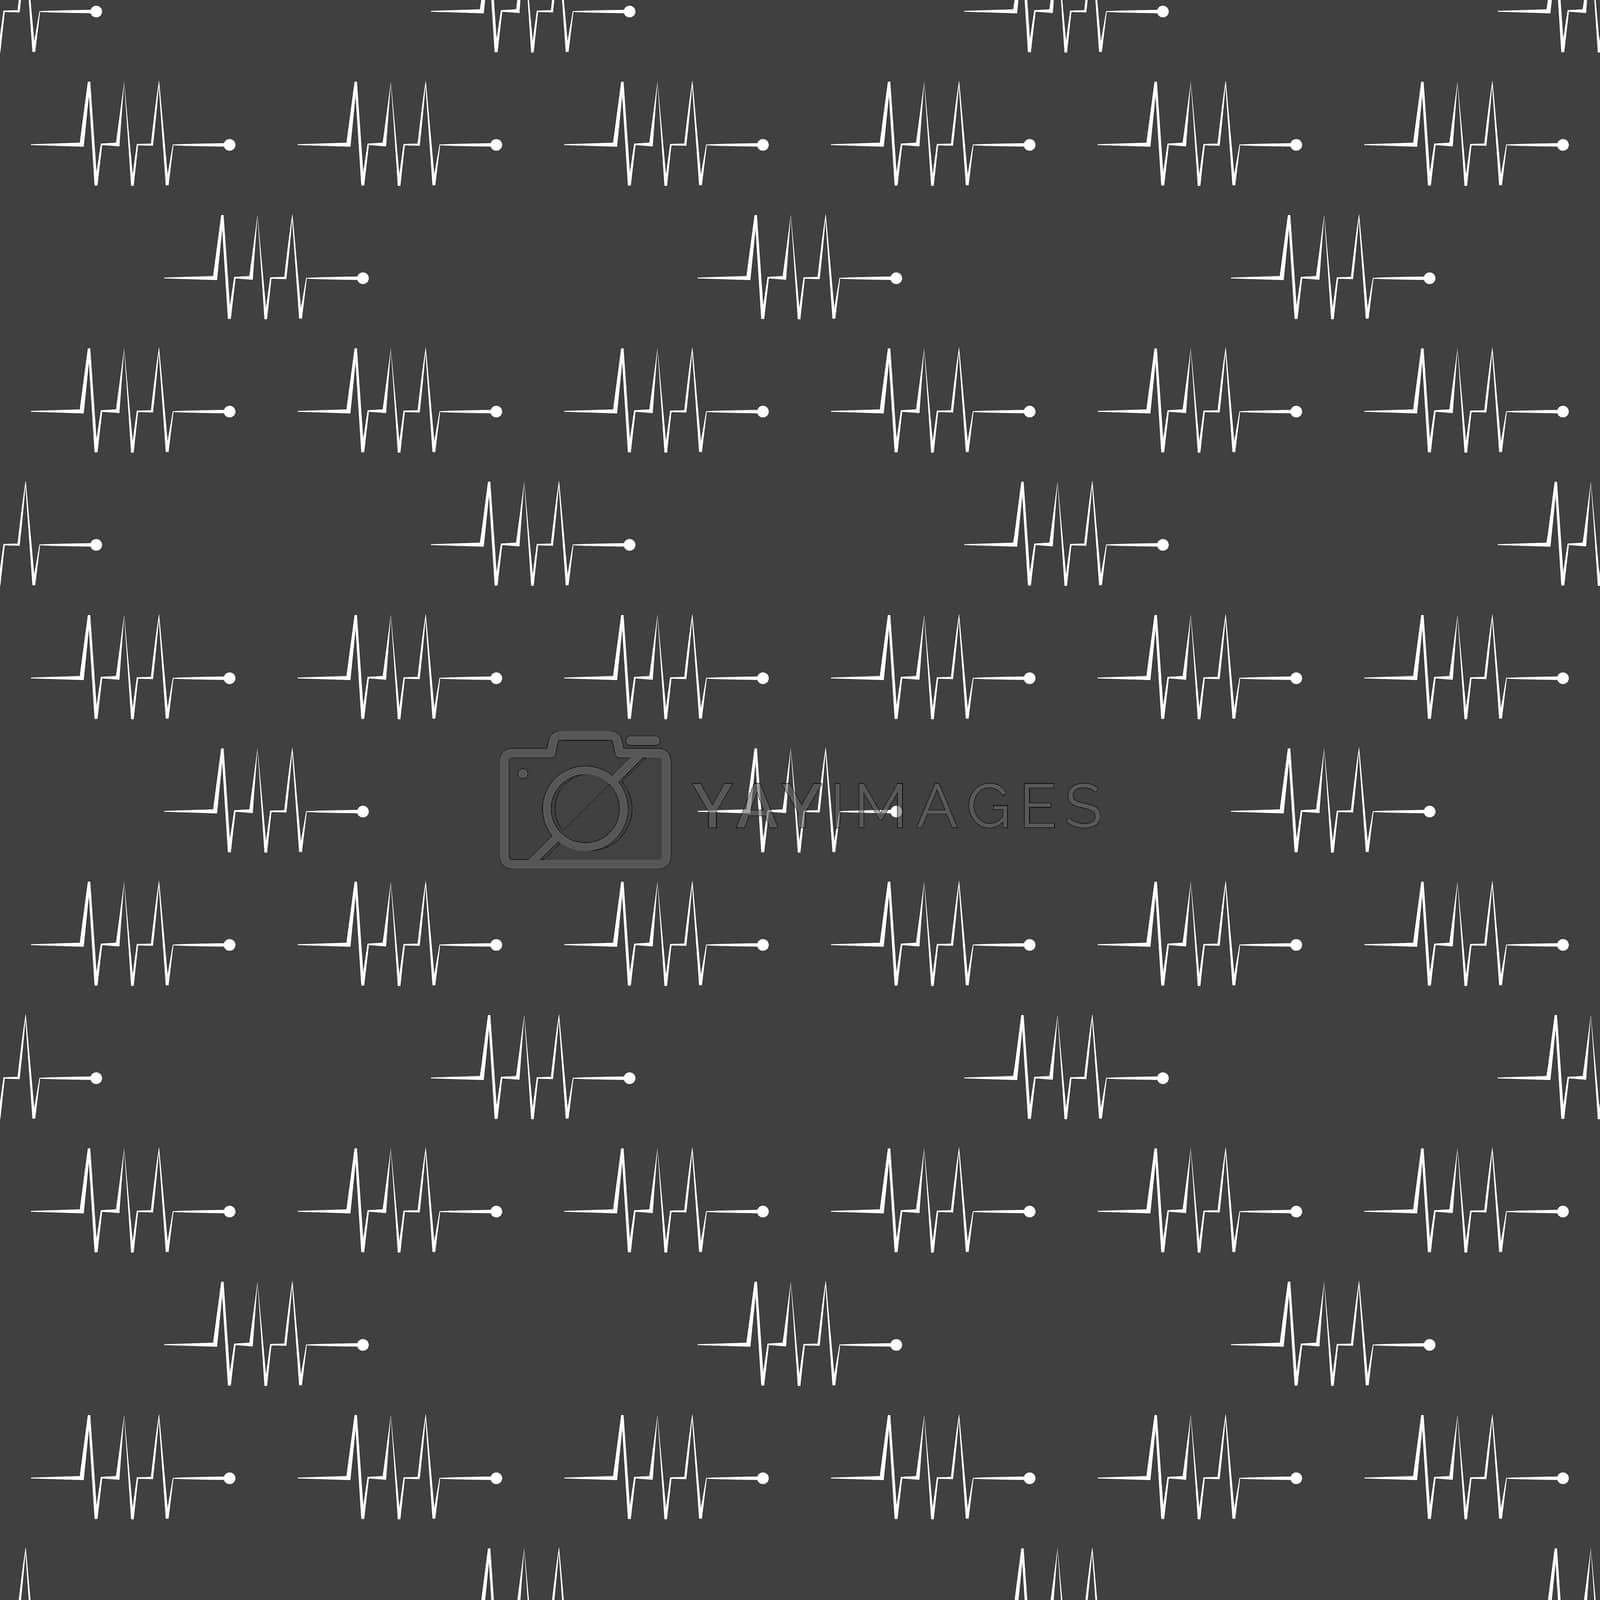 Royalty free image of heart rhythm web icon. flat design. Seamless gray pattern. by serhii_lohvyniuk